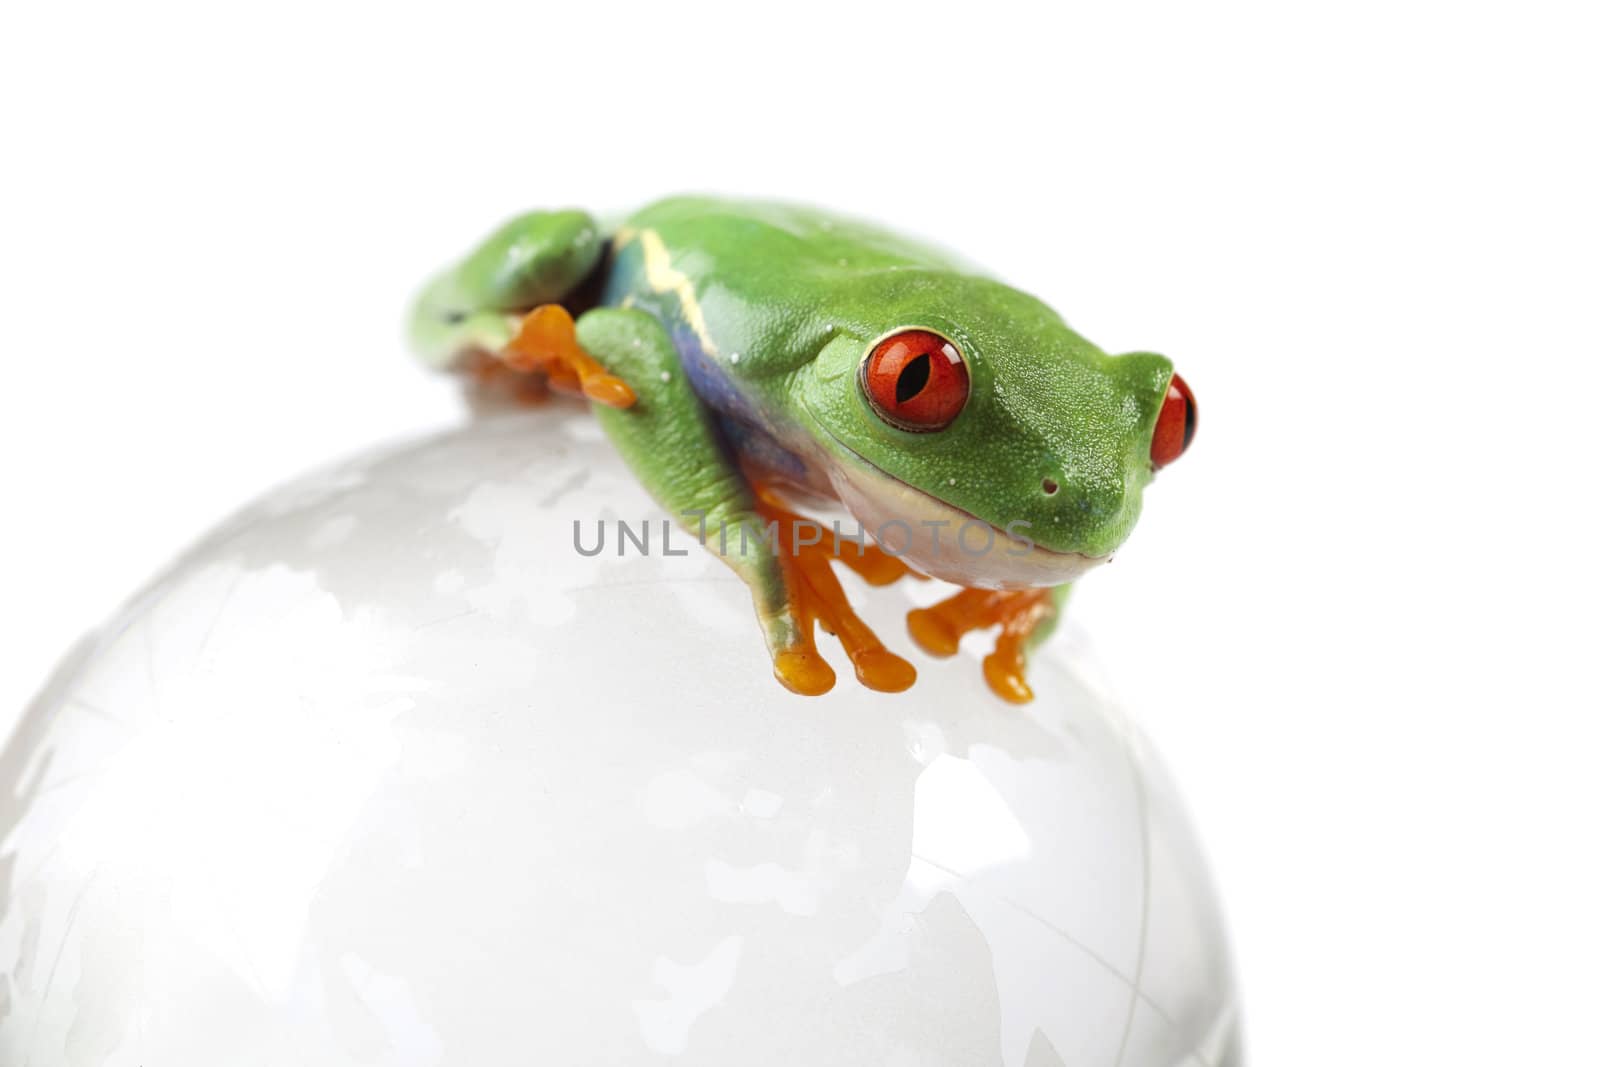 Red eyed tree frog sitting on globe